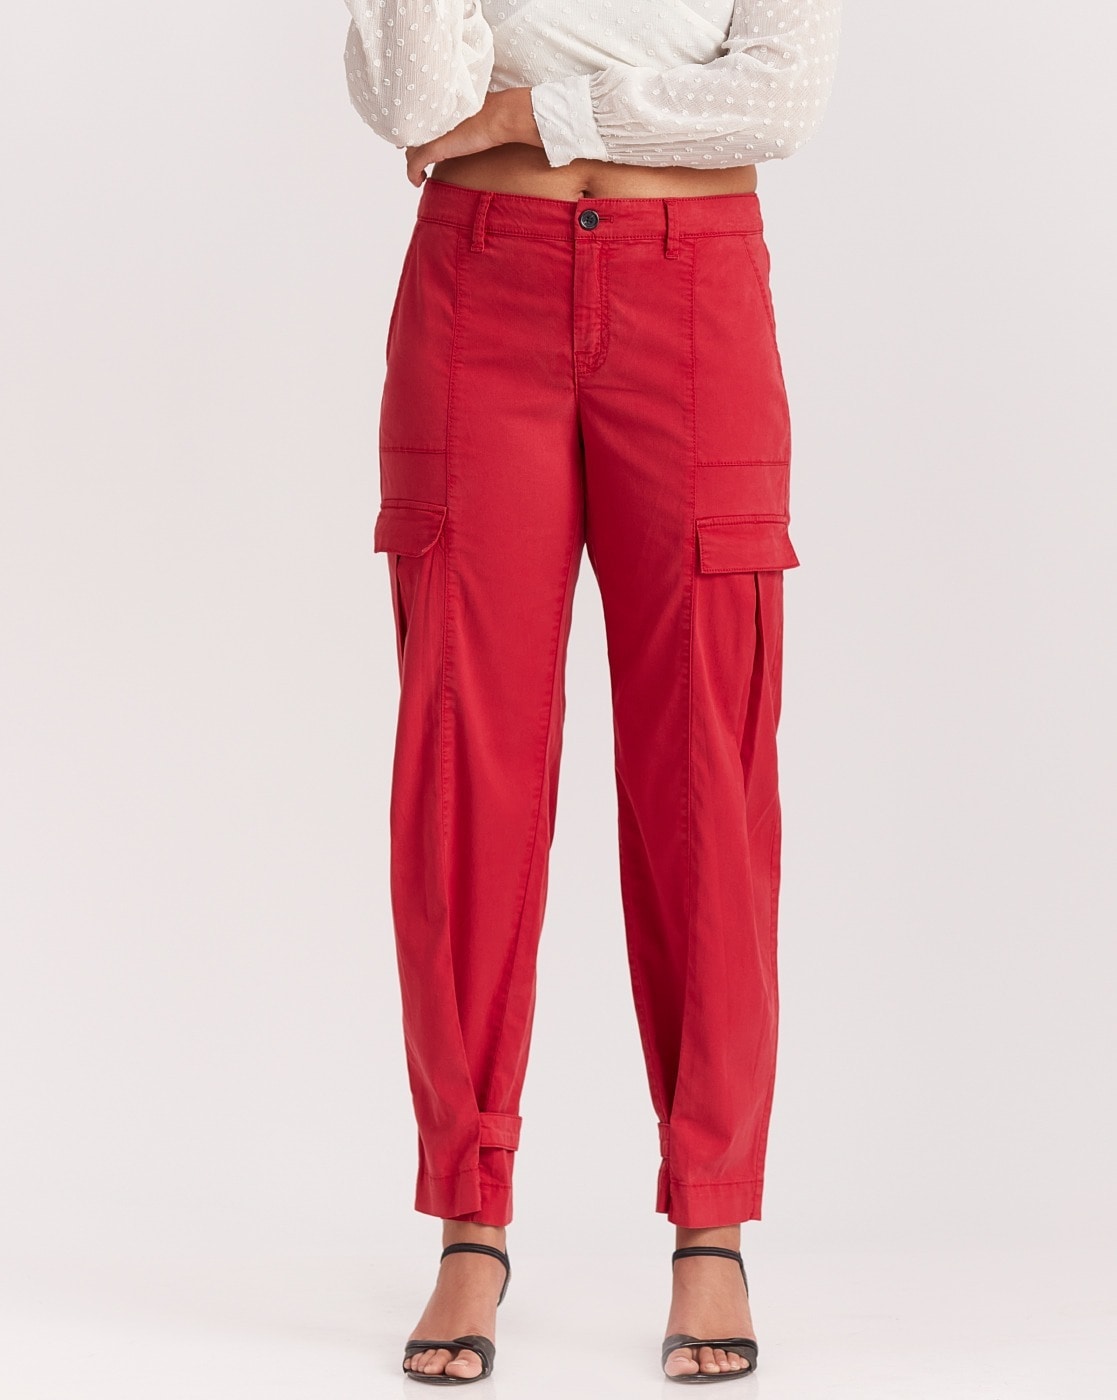 Buy Red Trousers  Pants for Women by LISETTE Online  Ajiocom